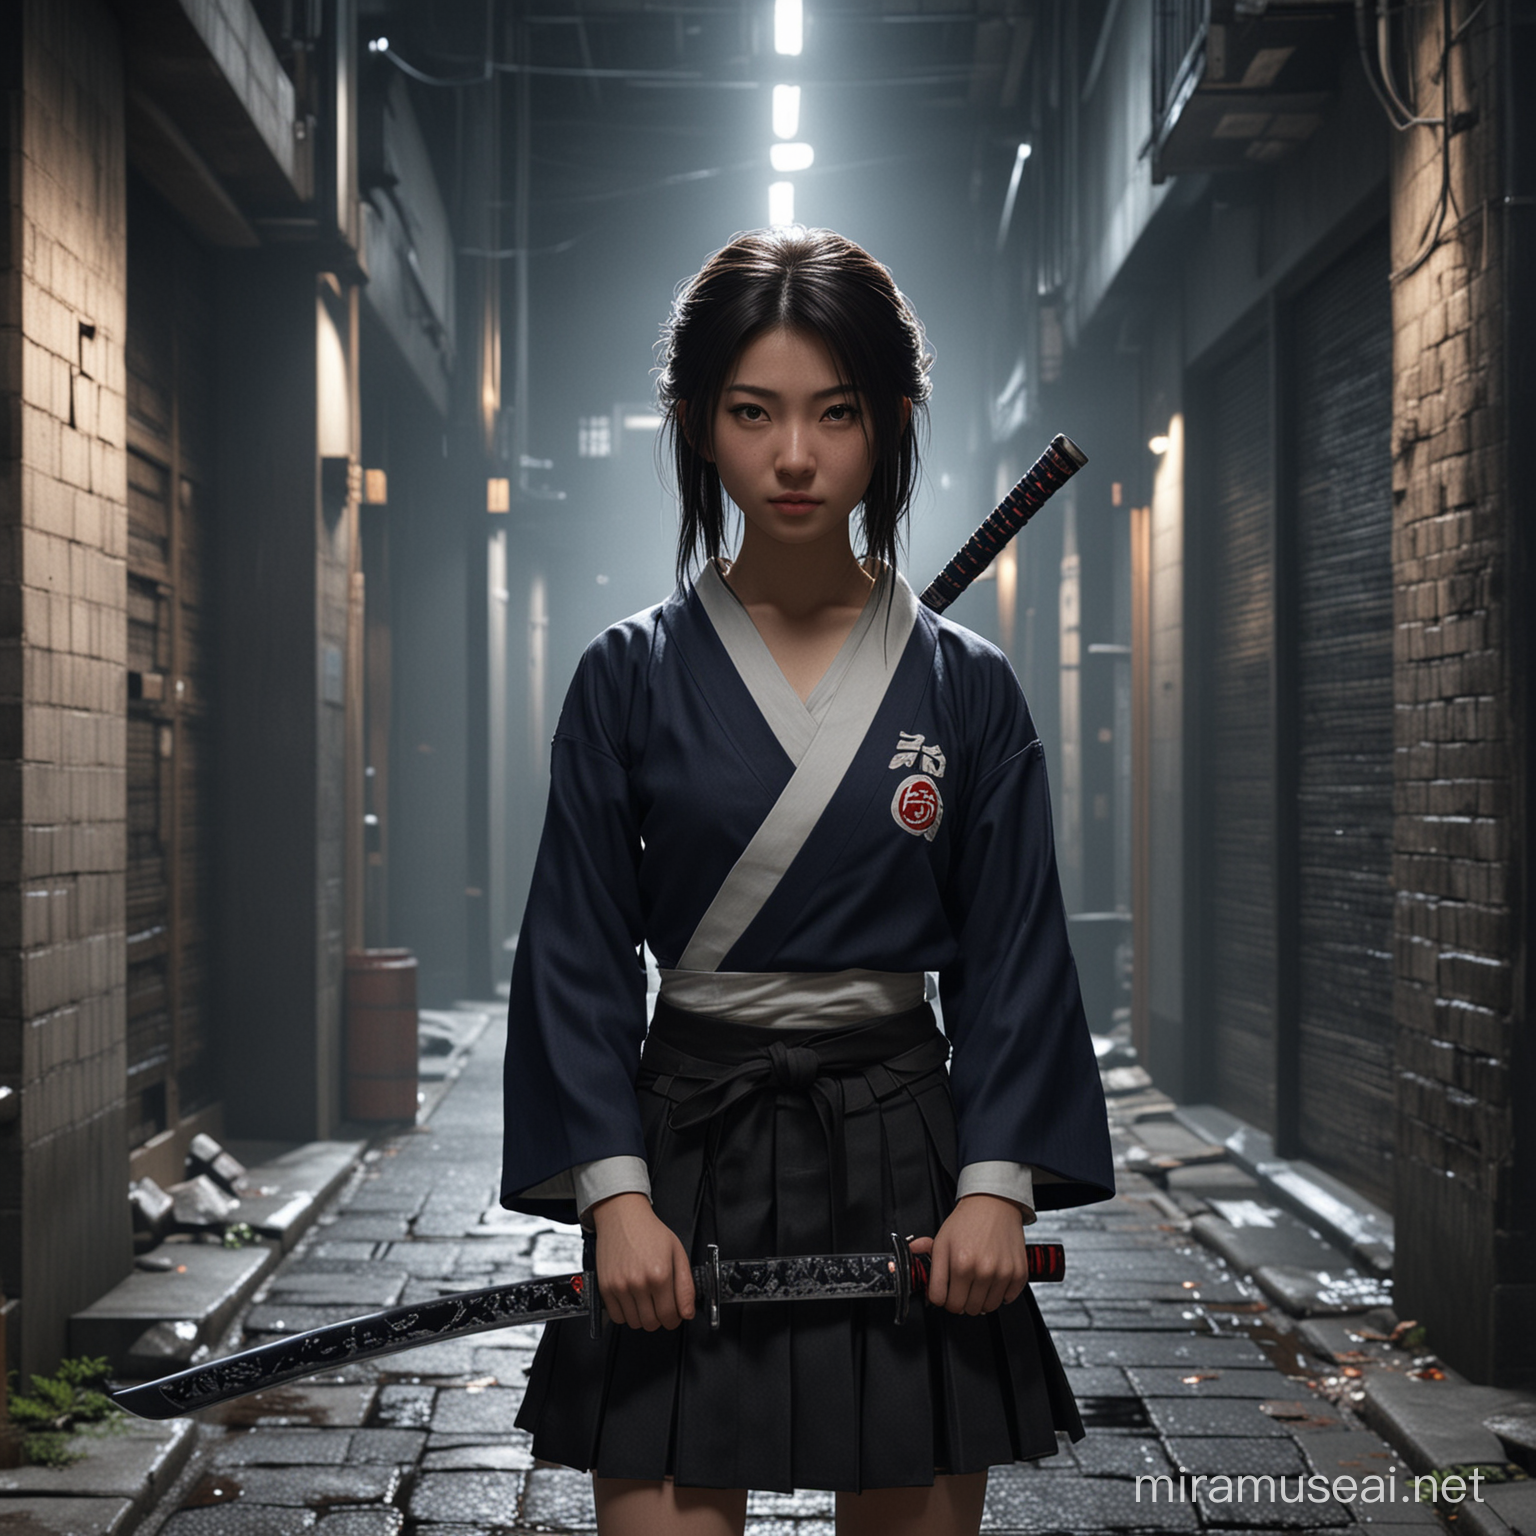 Elegant Japanese Schoolgirl Wielding Katana in Cinematic Dark Alley